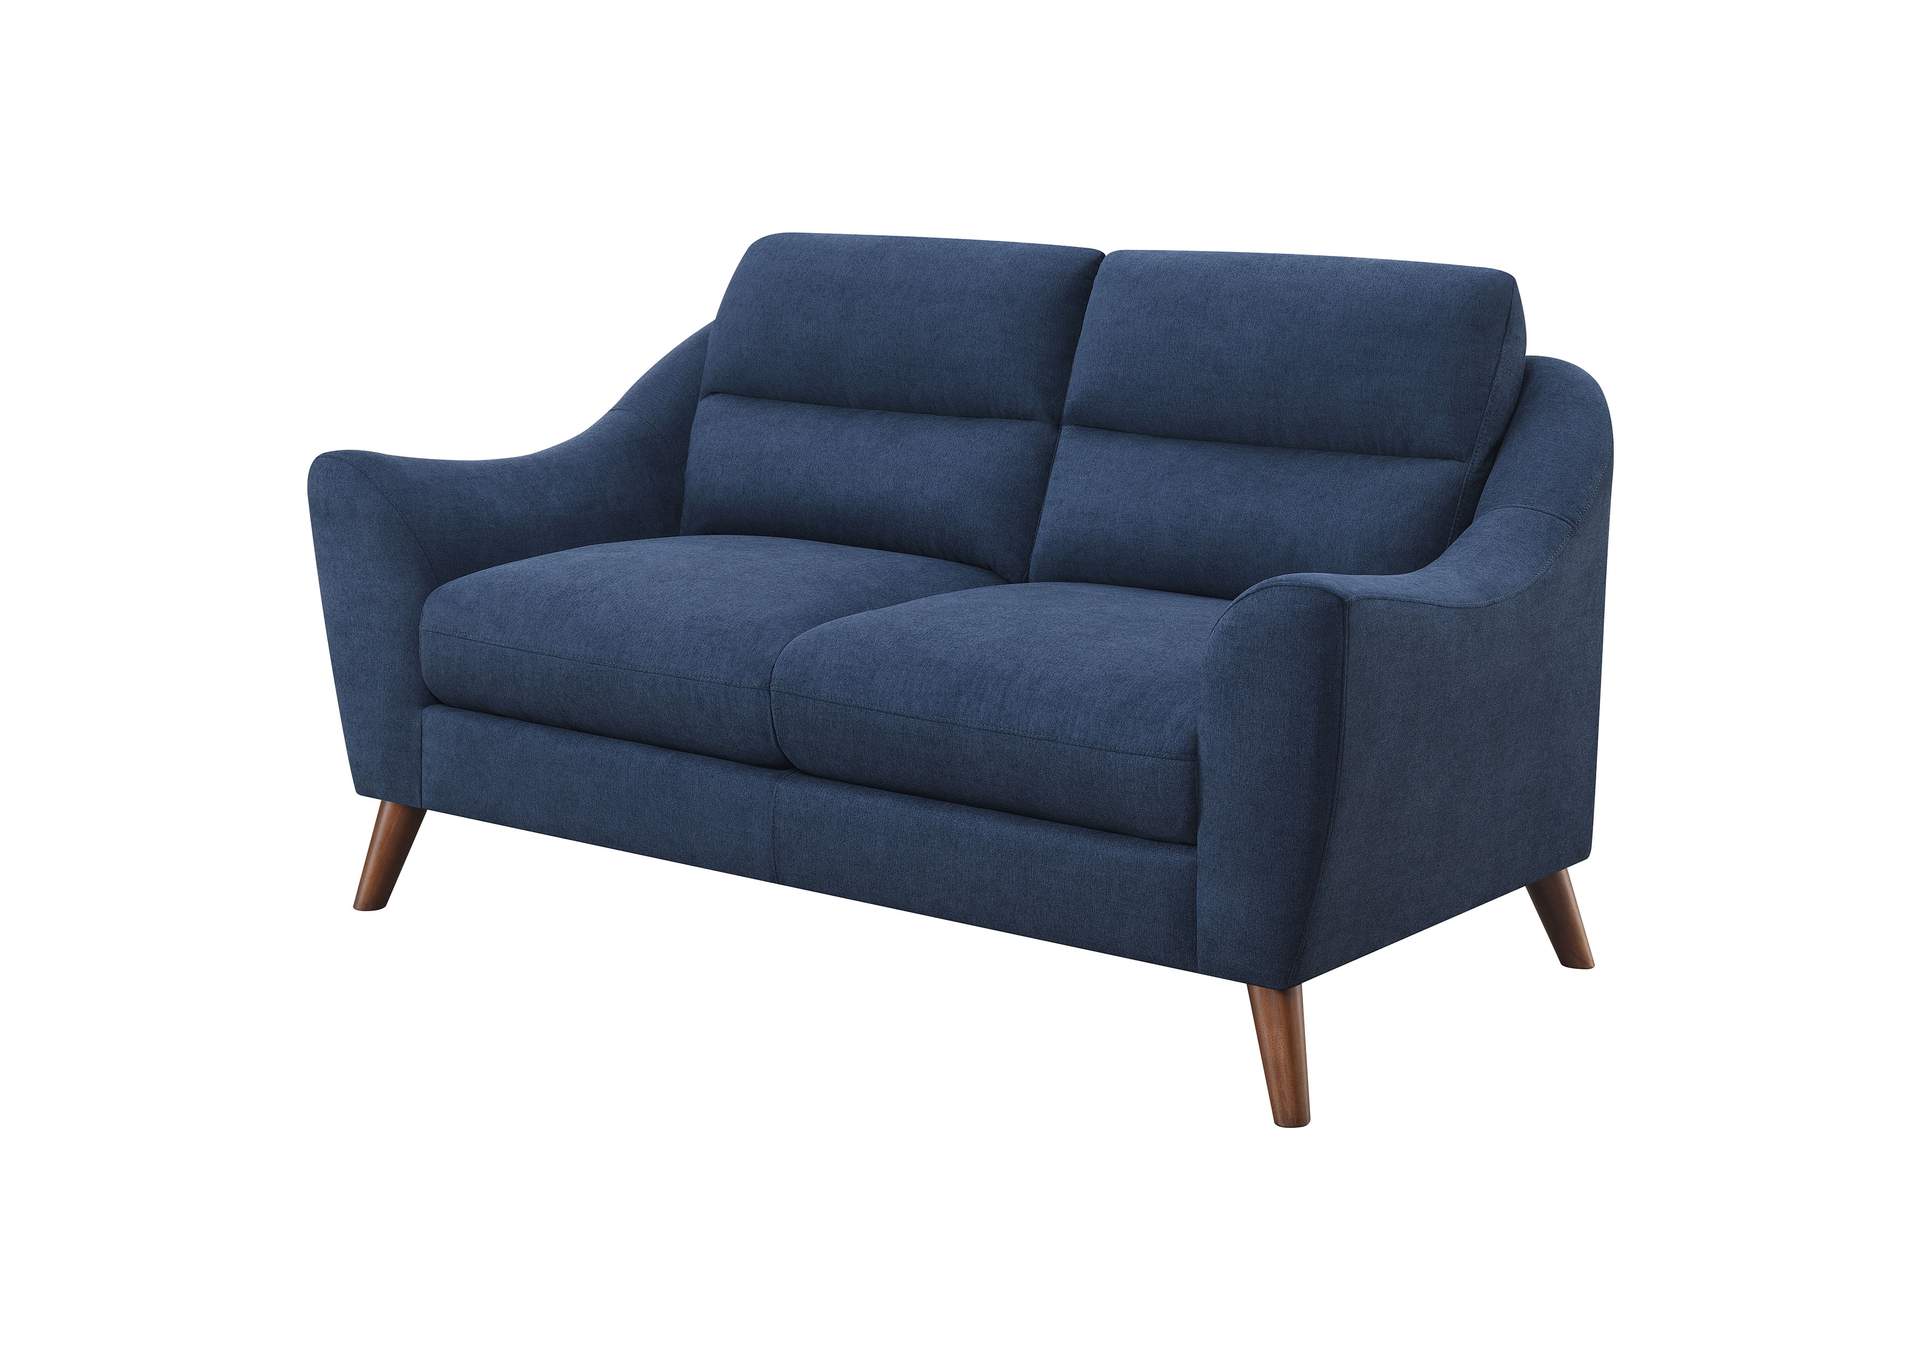 Gano Sloped Arm Upholstered Loveseat Navy Blue,Coaster Furniture